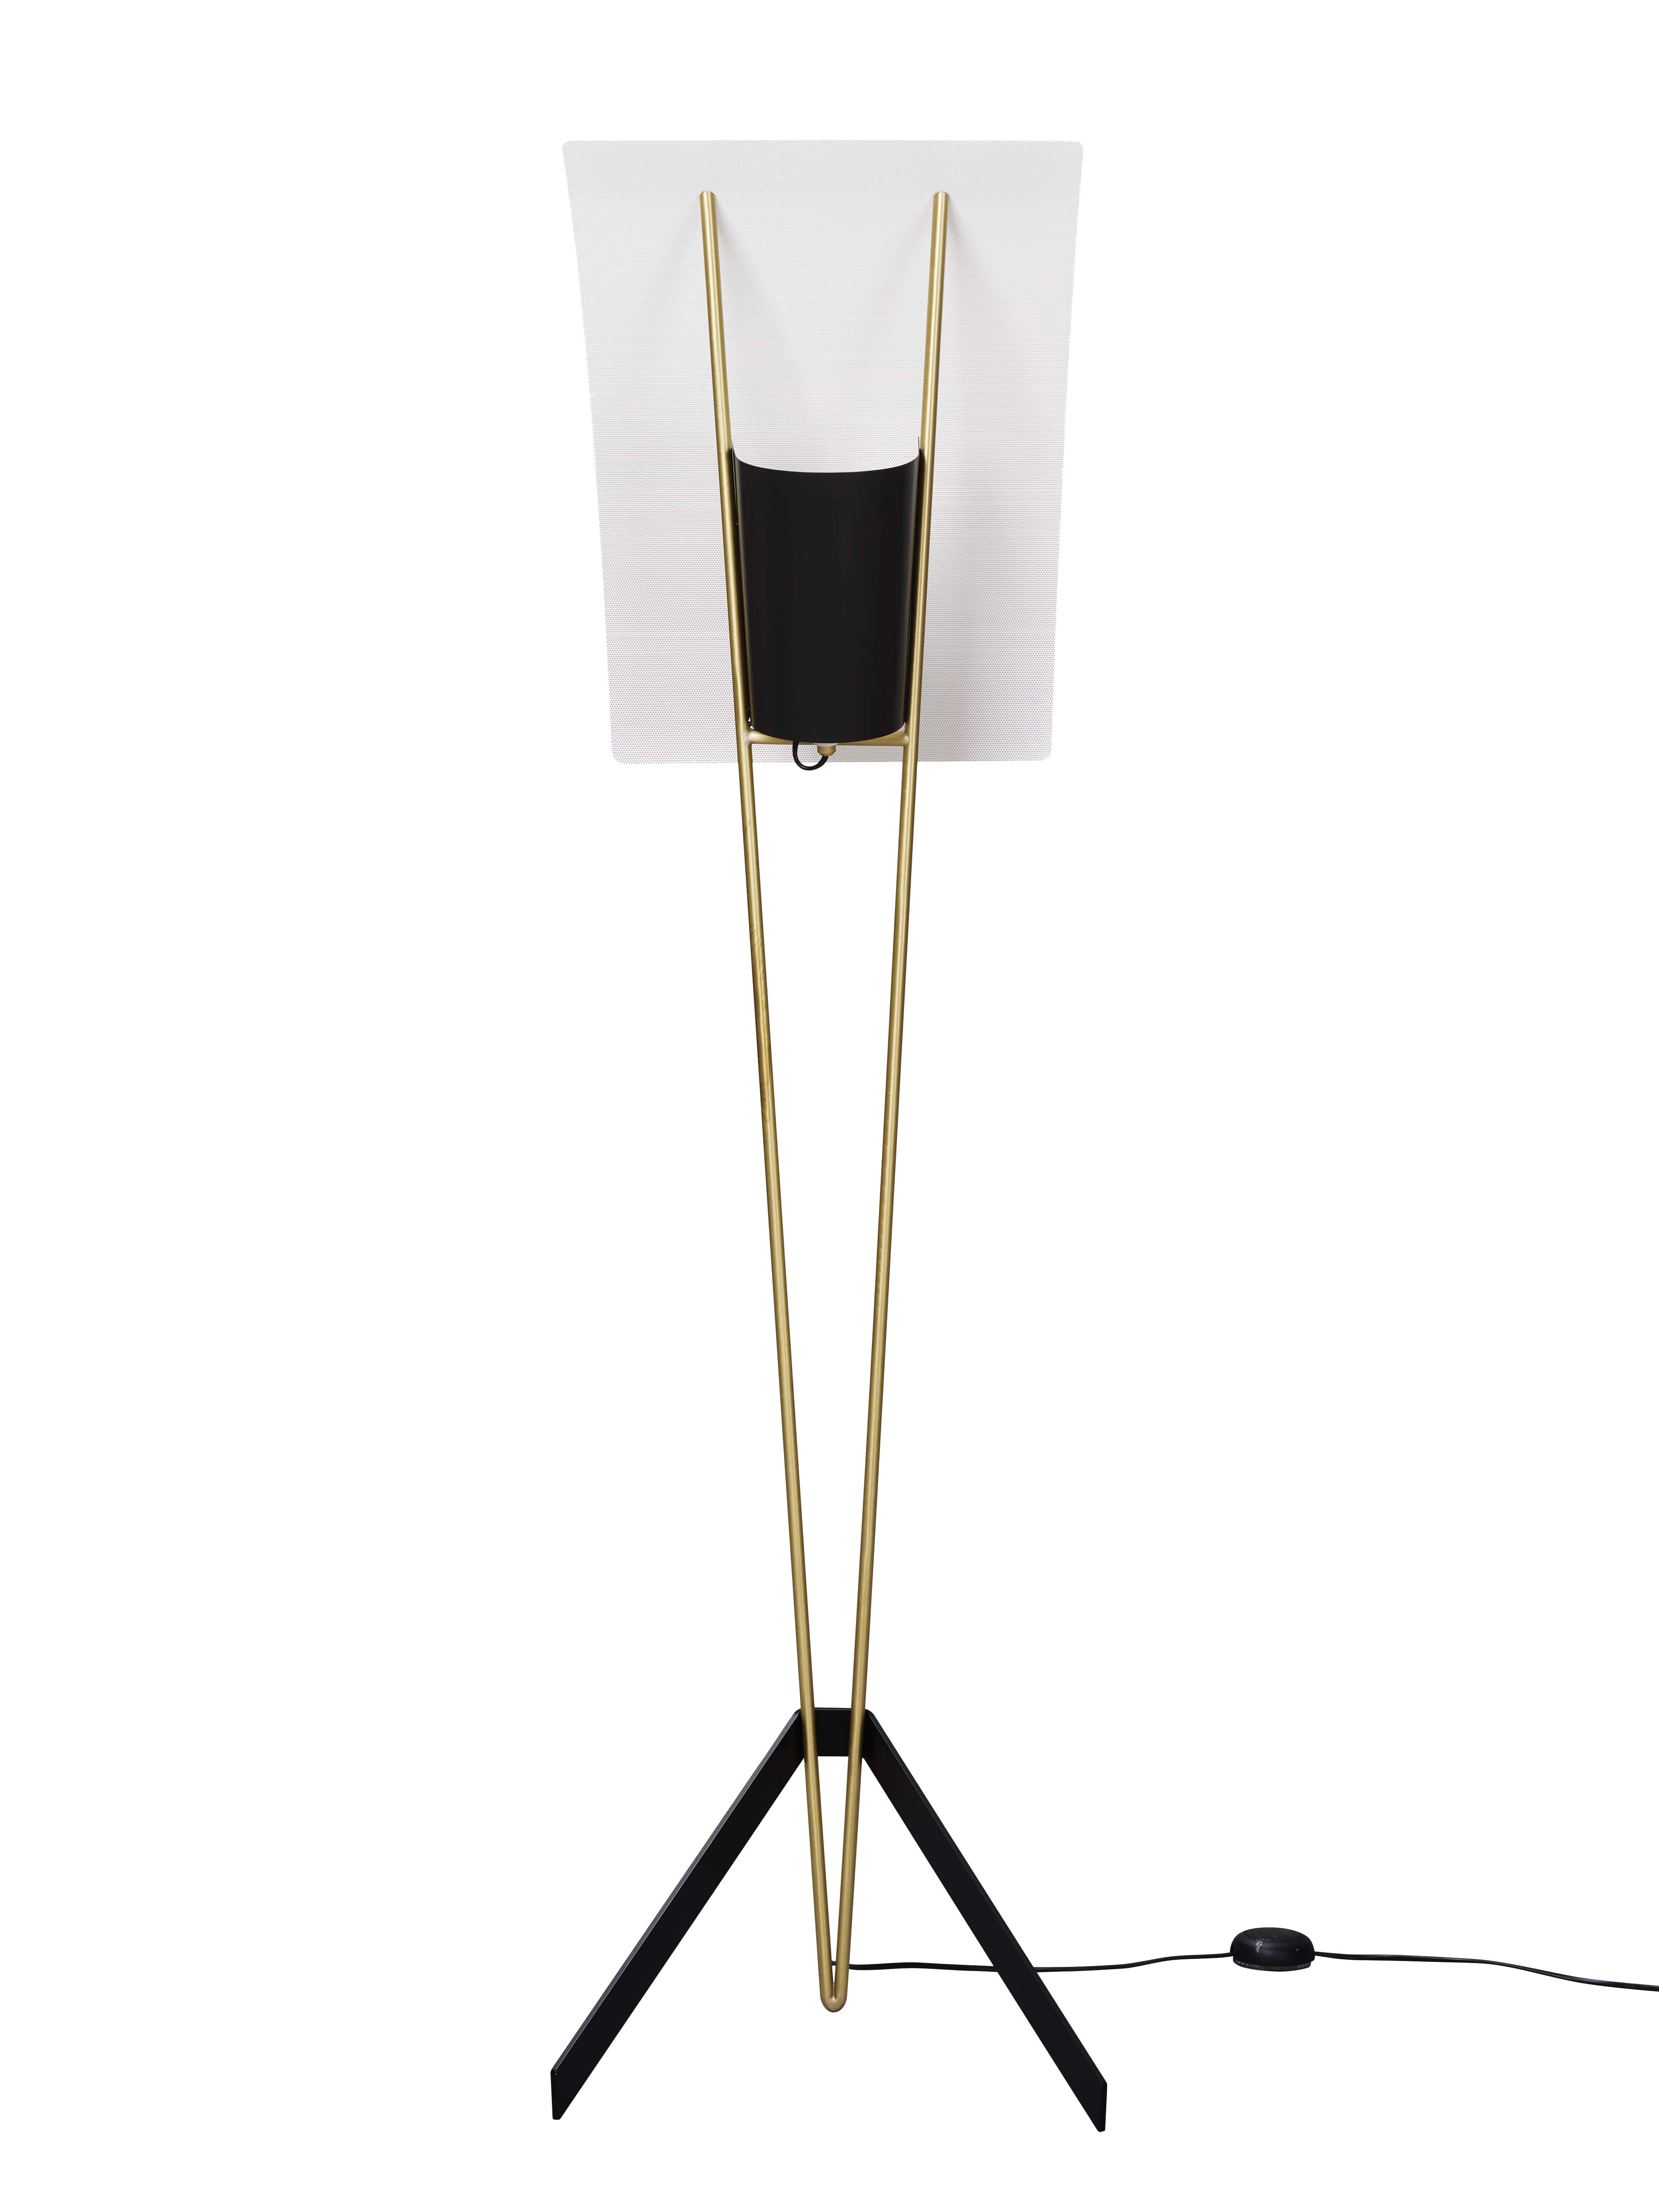 Pierre Guariche Kite Floor Lamp in Black and White for Sammode Studio For Sale 1